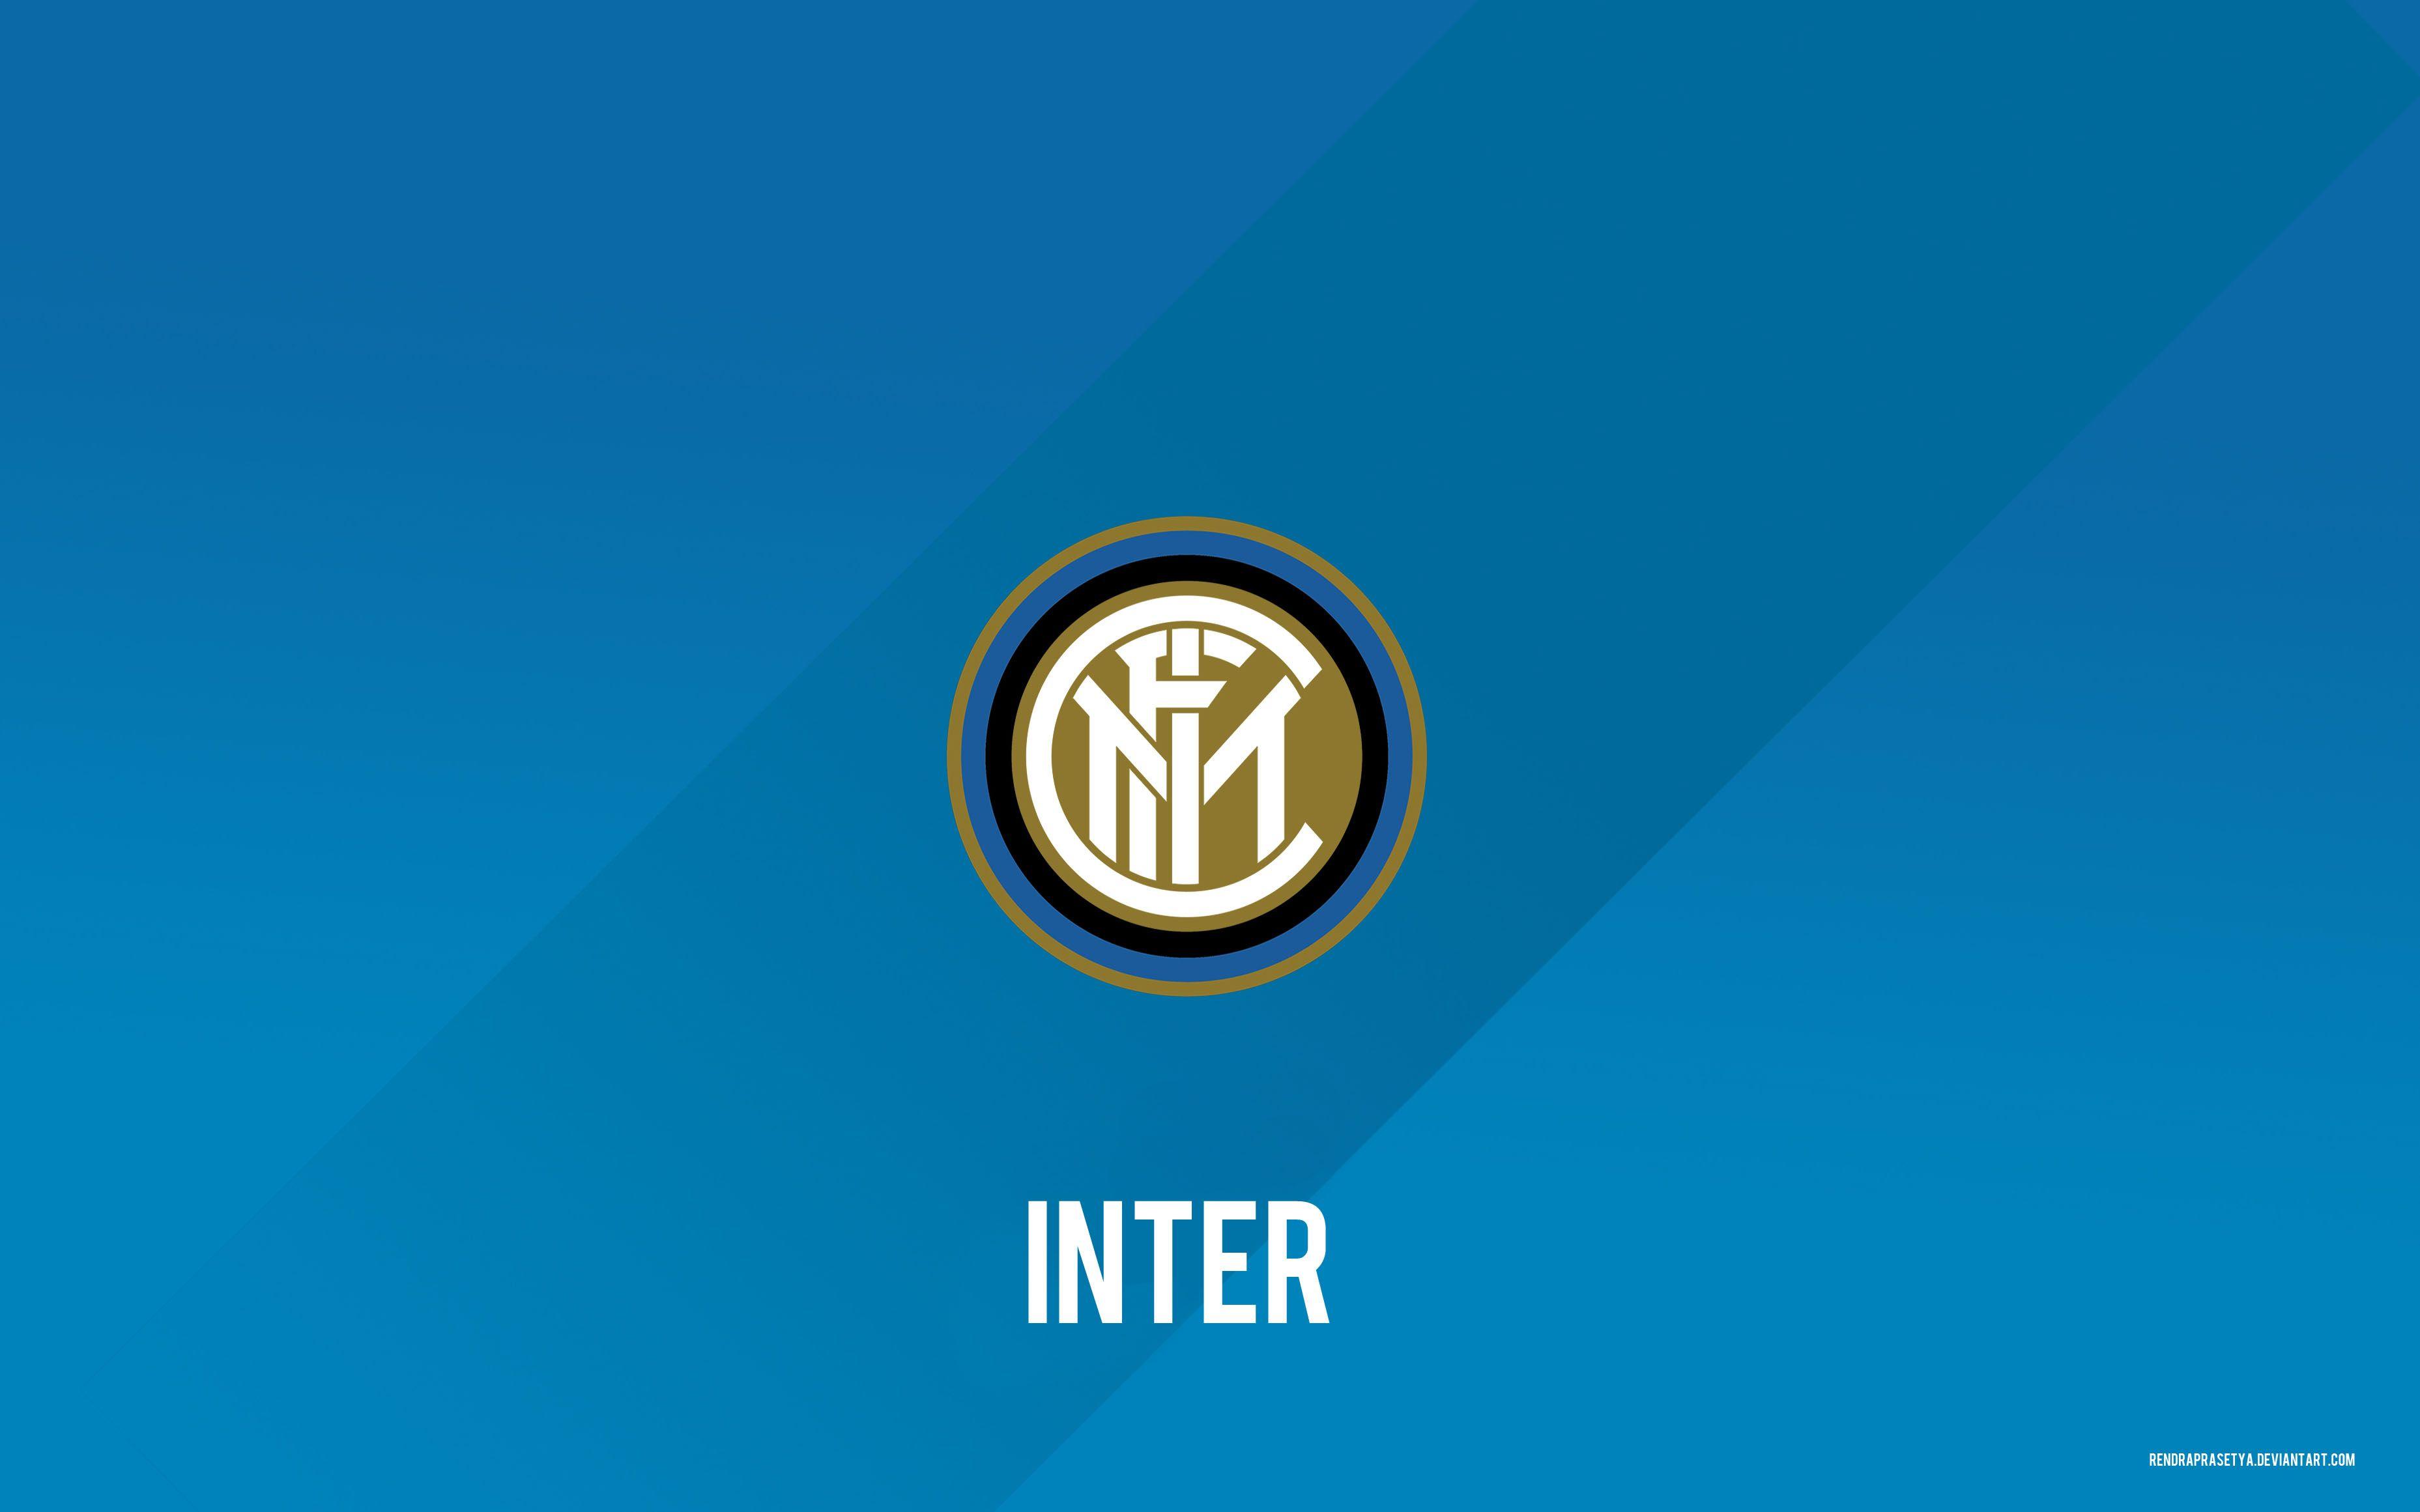 Inter Logo - Inter Milan Football Club Logo, HD Sports, 4k Wallpapers, Images ...